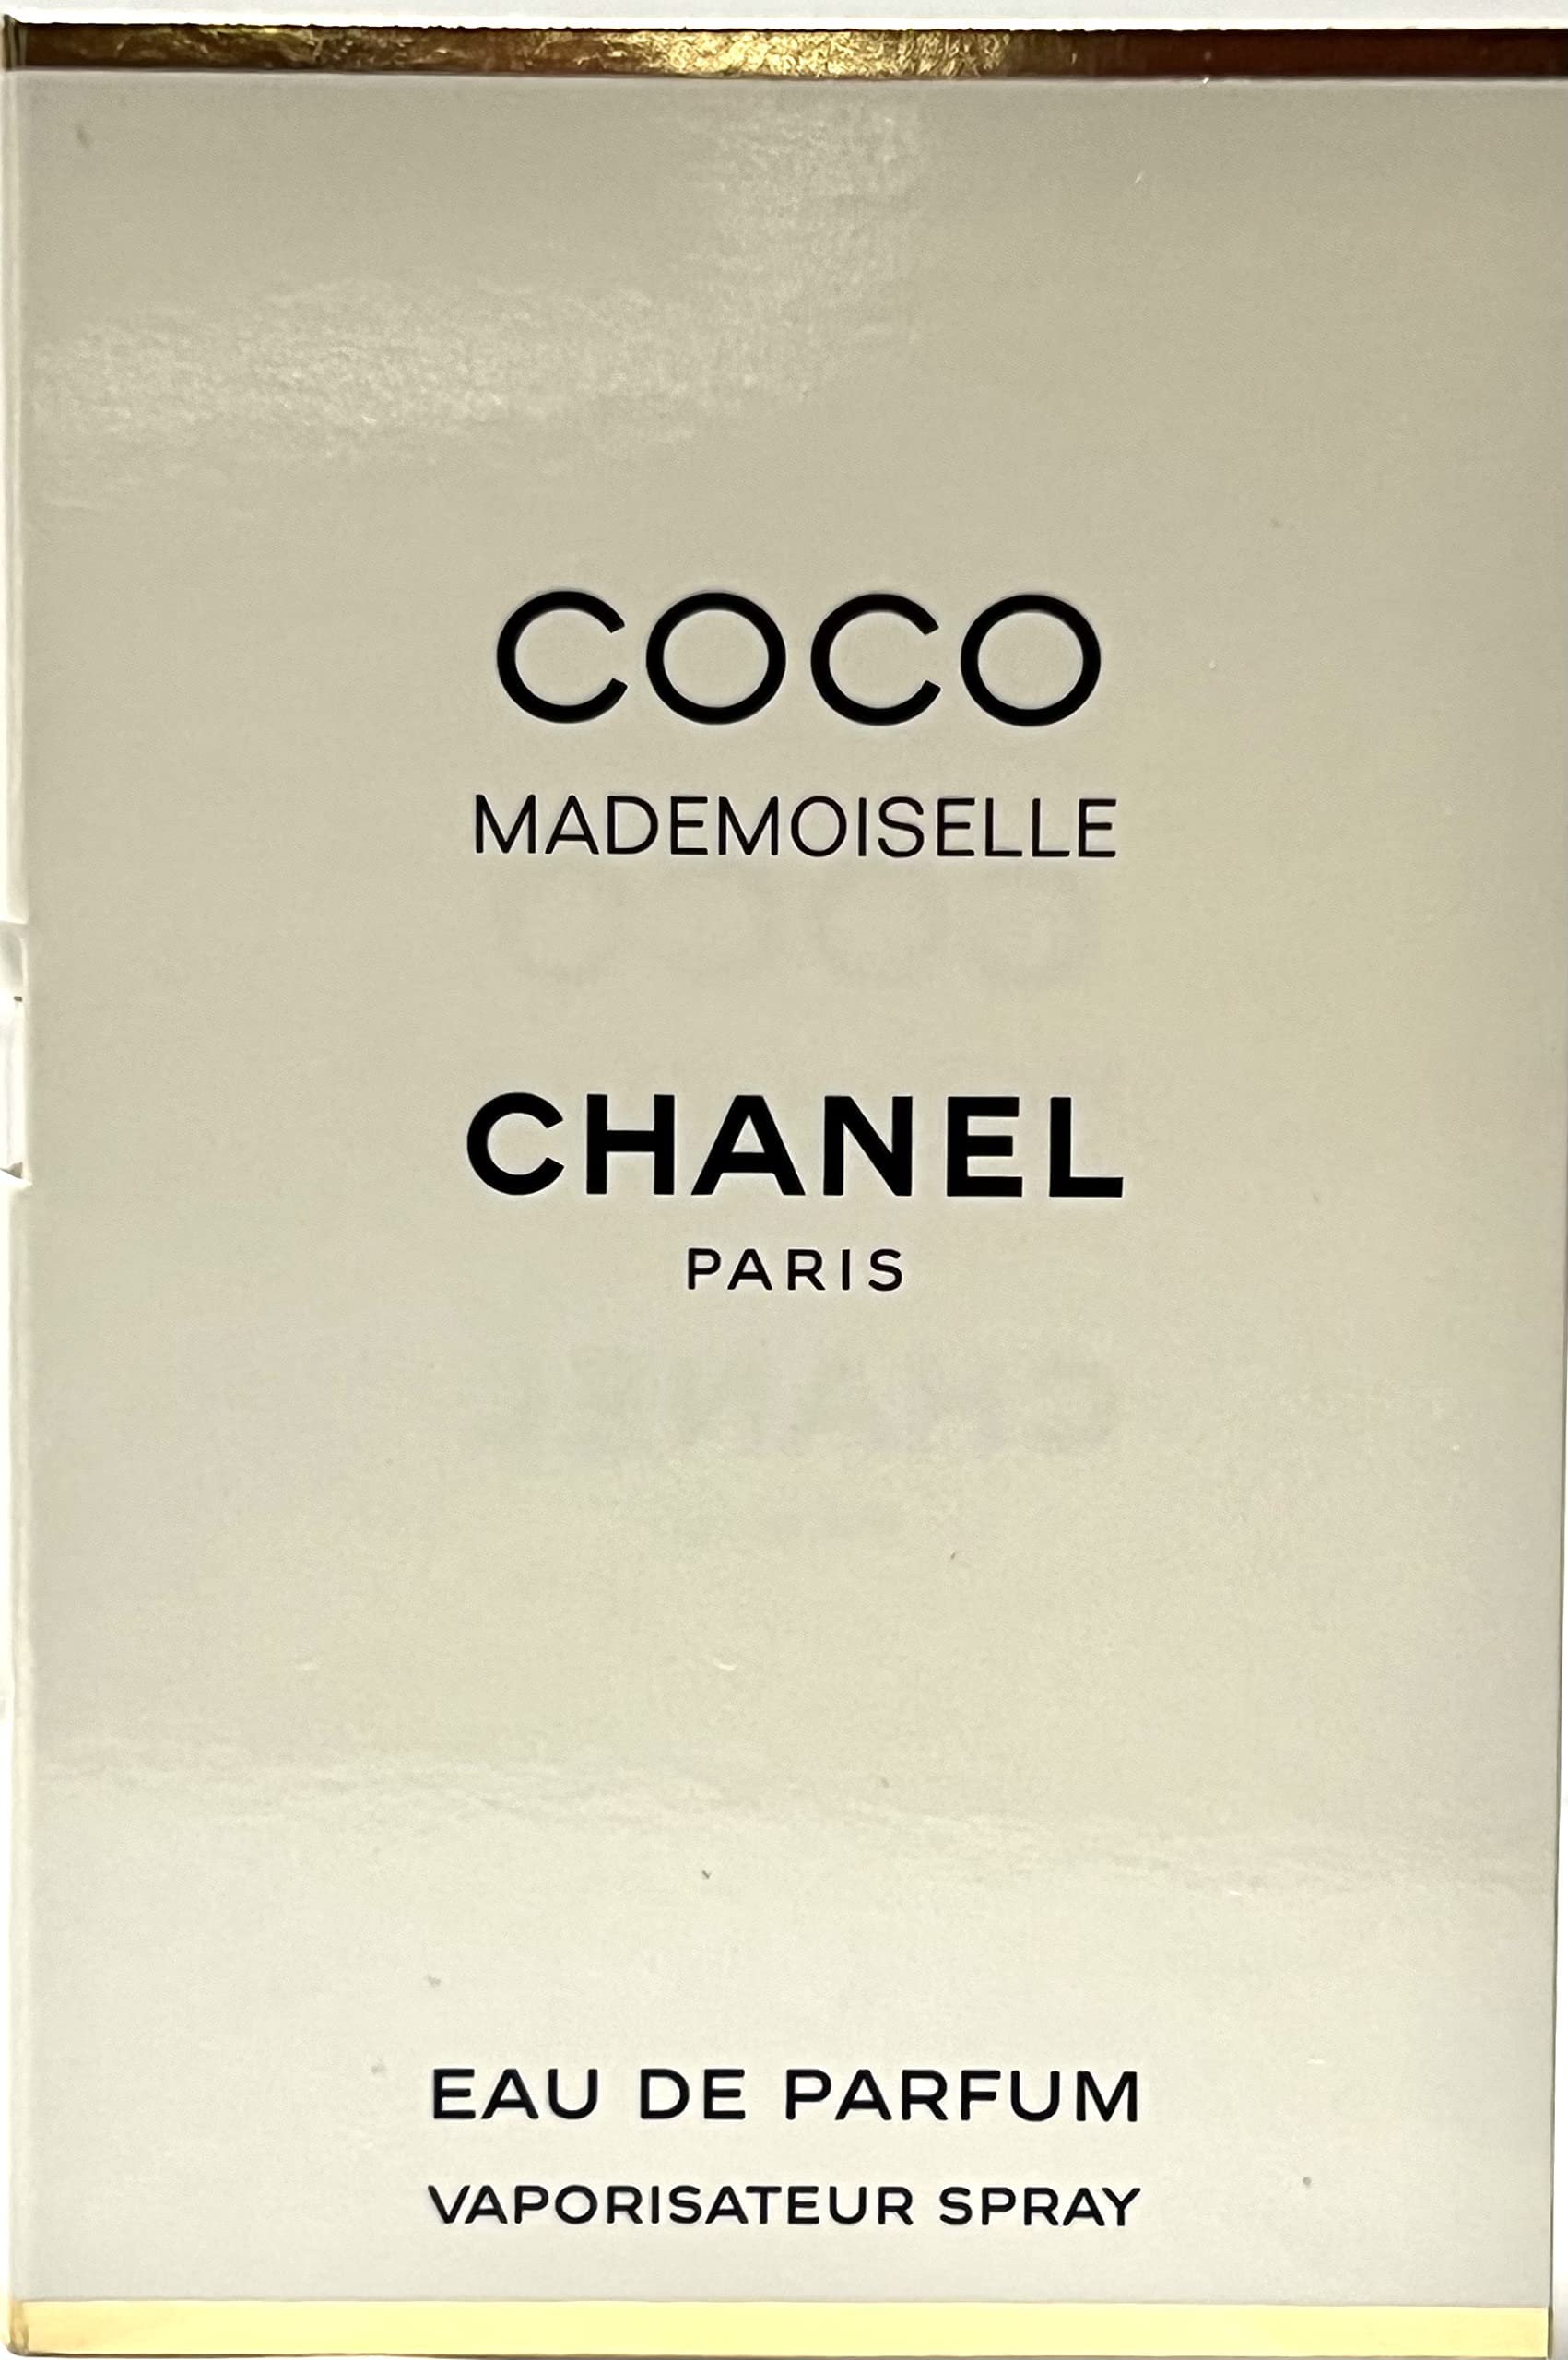 Chanel reintroduces Coco Mademoiselle as a travel friendly purse spray   Luxurylaunches